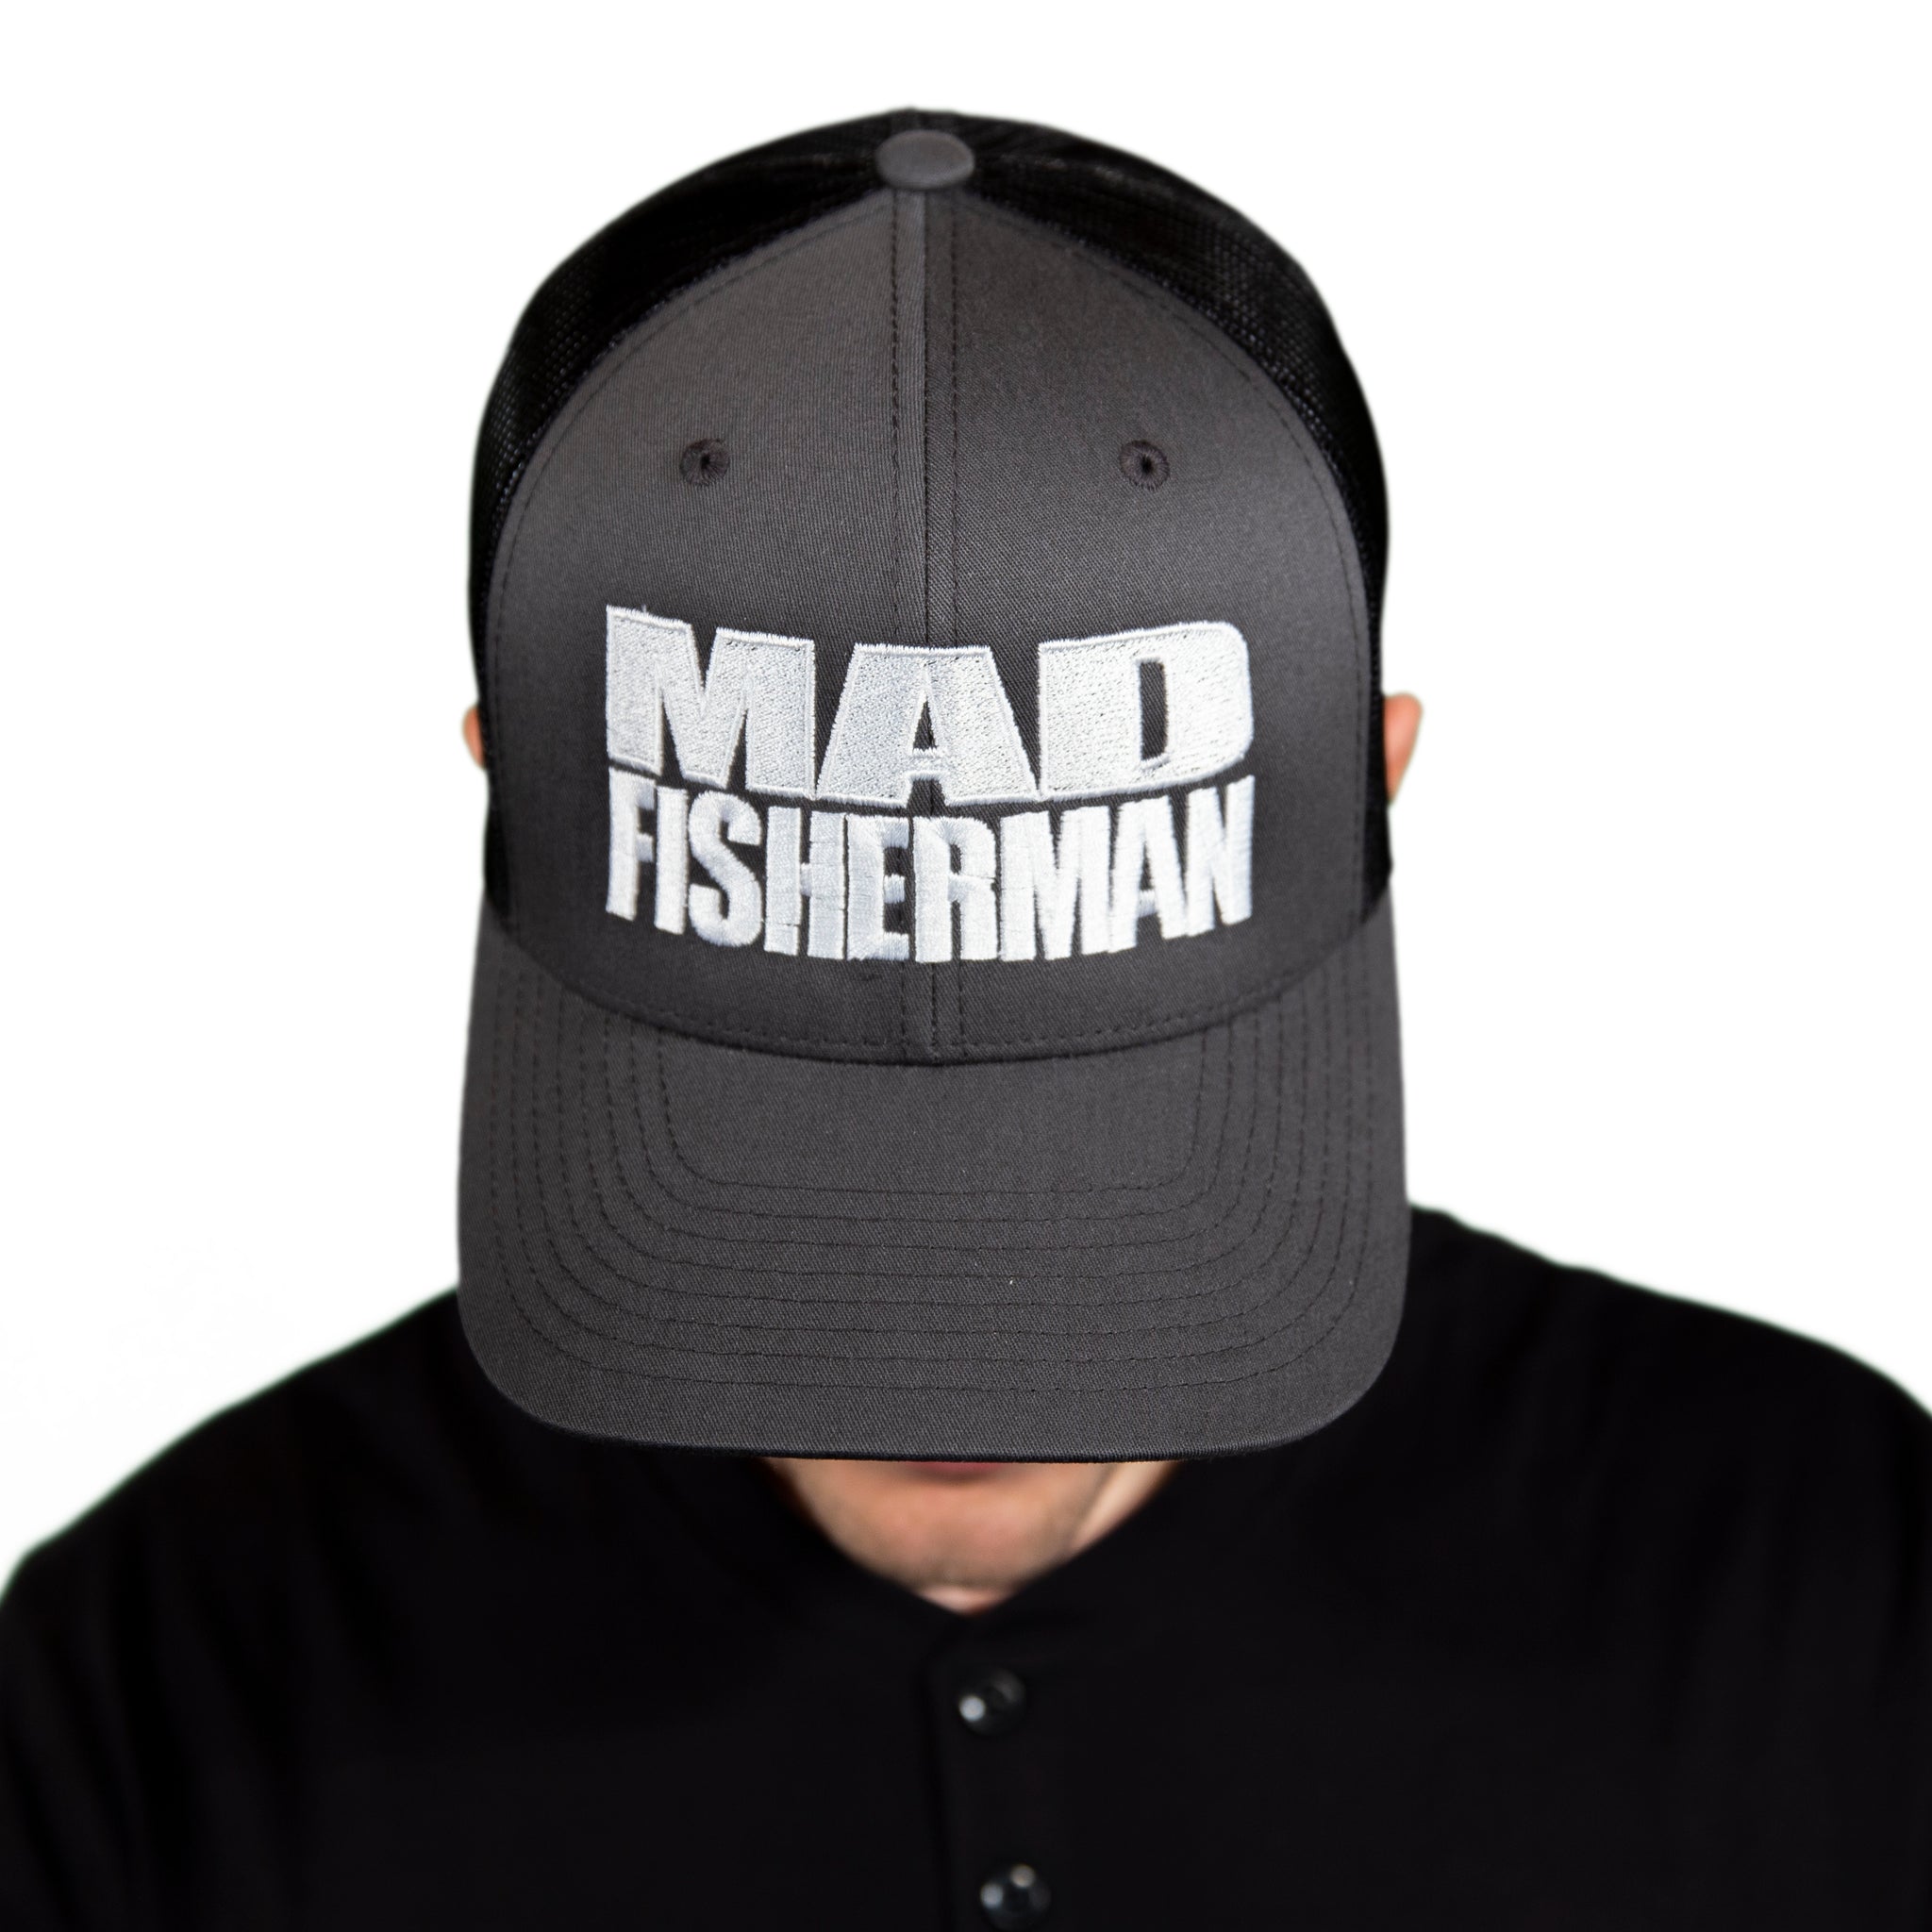 “MAD FISHERMAN” Gray Snapback